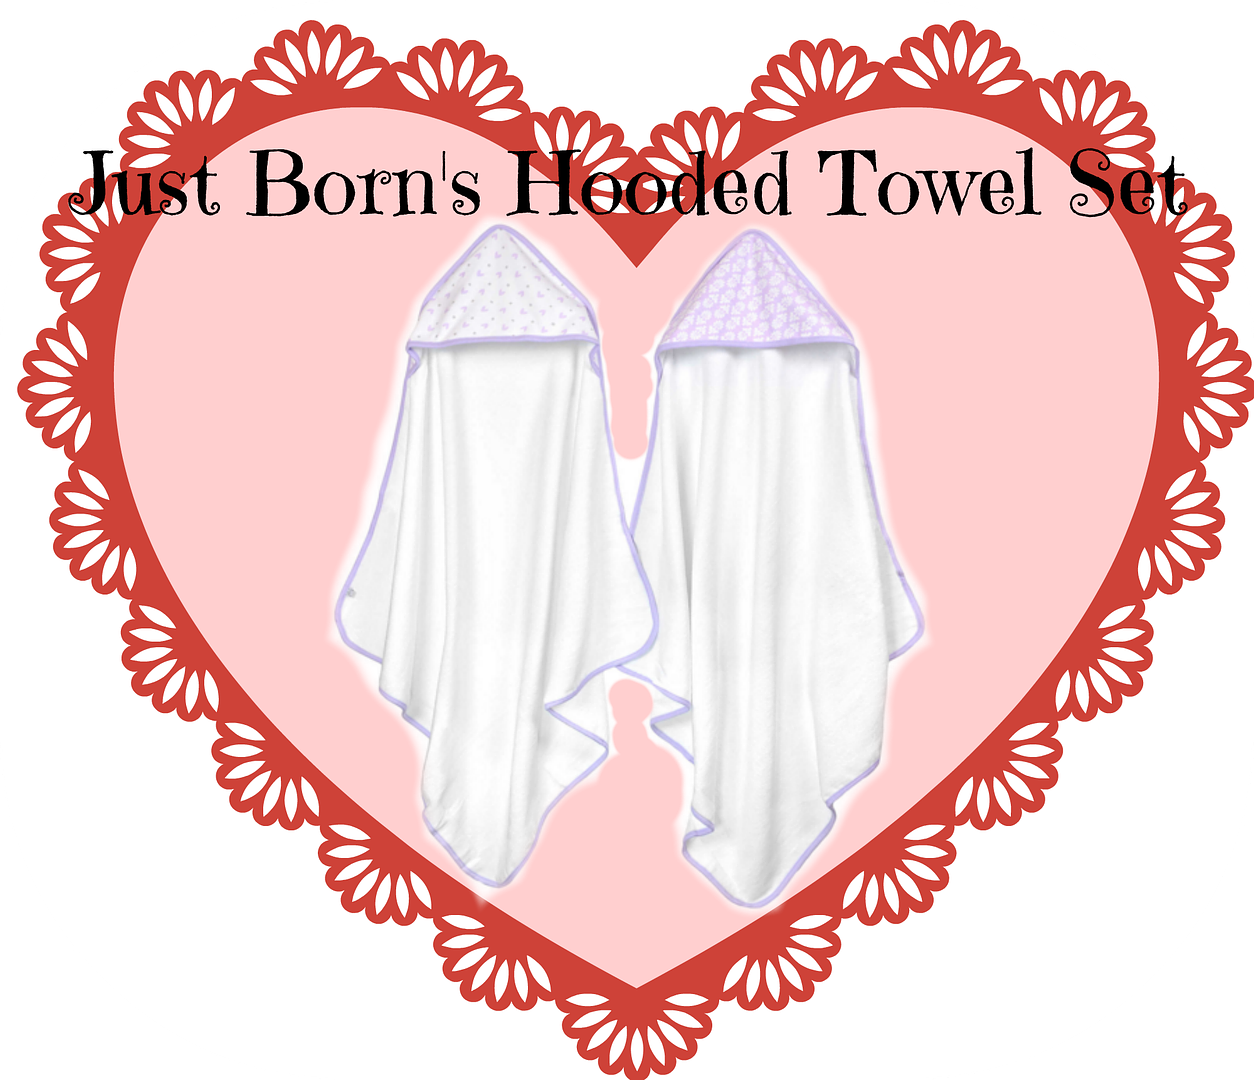 Just Born Hooded Towel Set